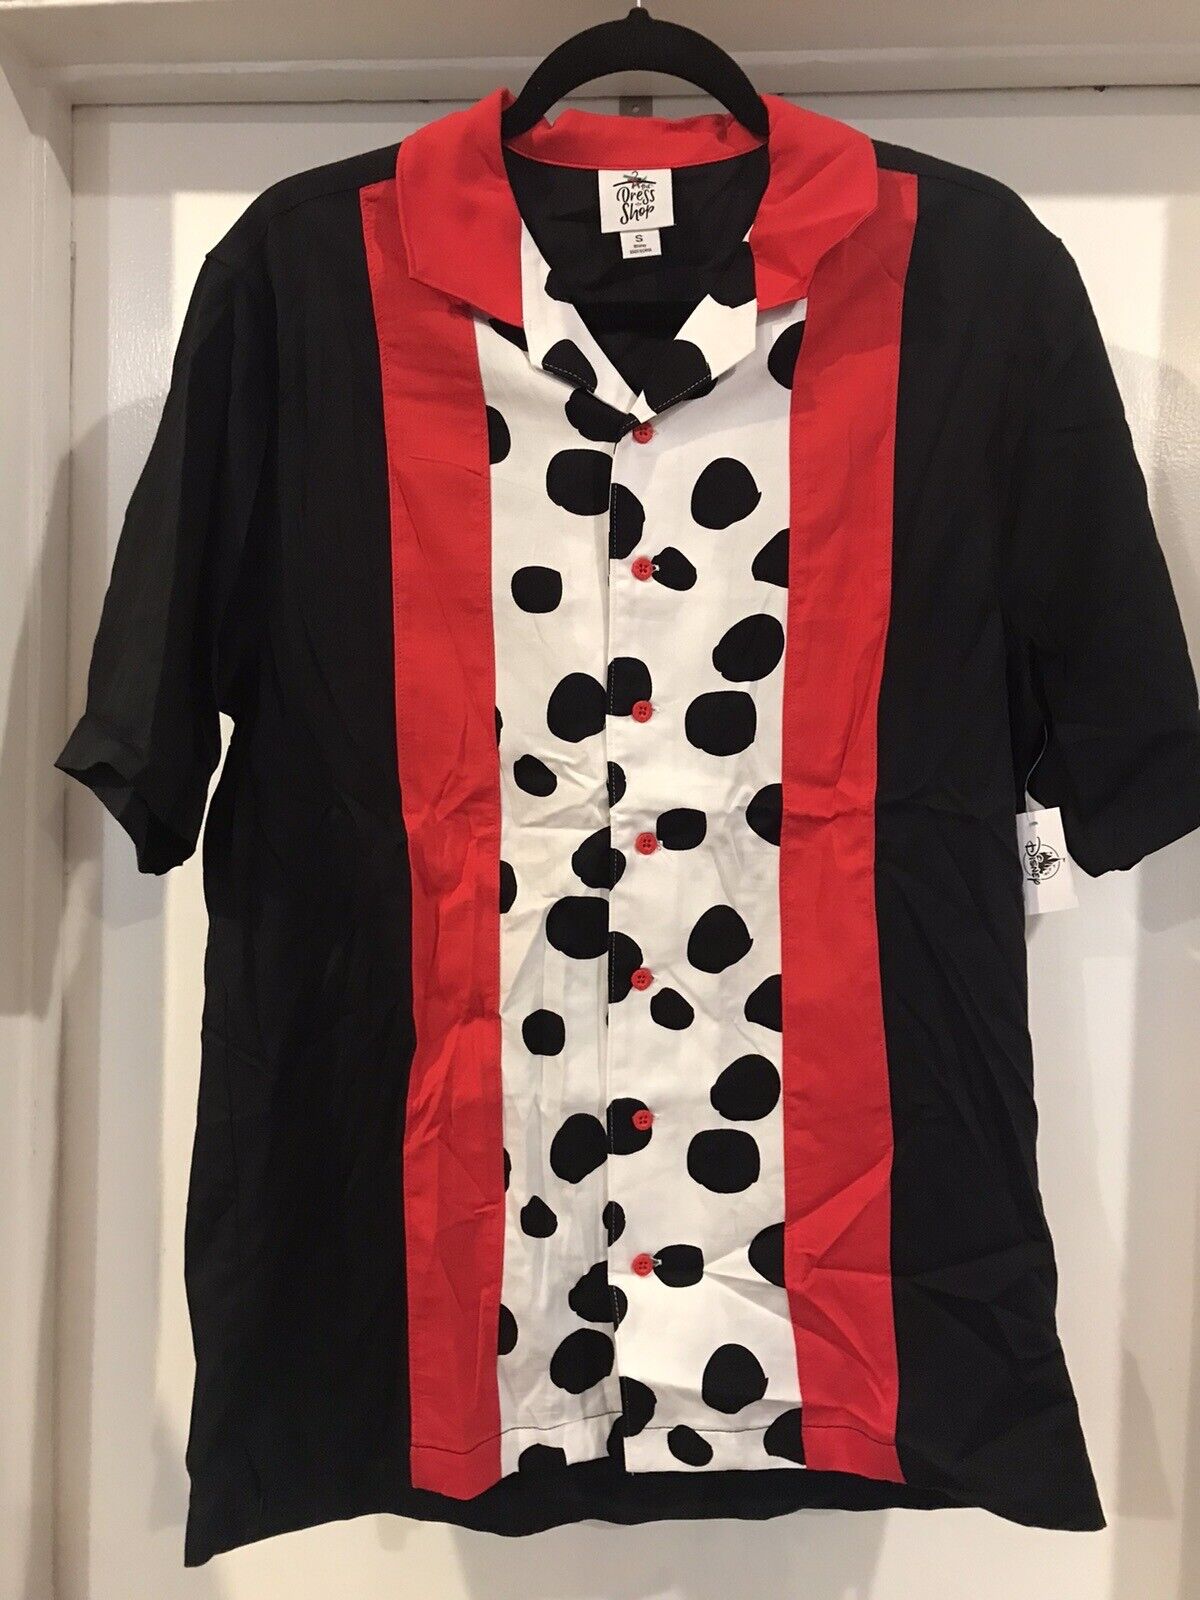 Disney Dress Shop Pongo’s Pins 101 Dalmatians Button Down Bowling Shirt Size S